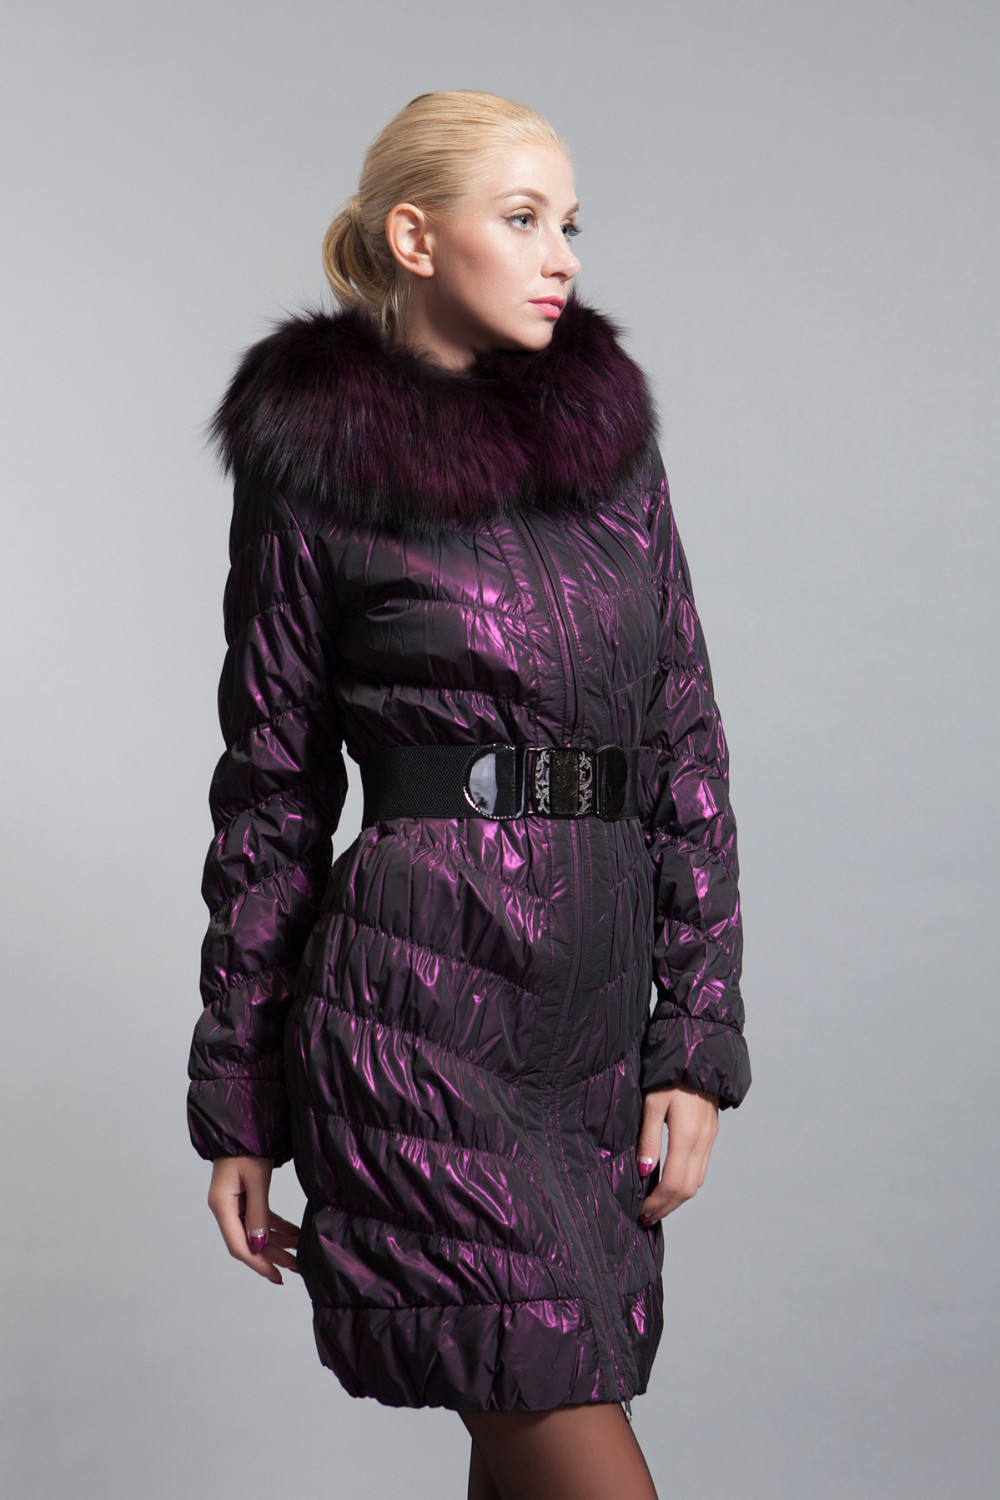 BASIC-EDITIONS-Winter-New-Fashion-Women39s-Fur-Hooded-Long-Parkas-Slim-Fit-Jacket-Women-Cotton-Coat--32242494605